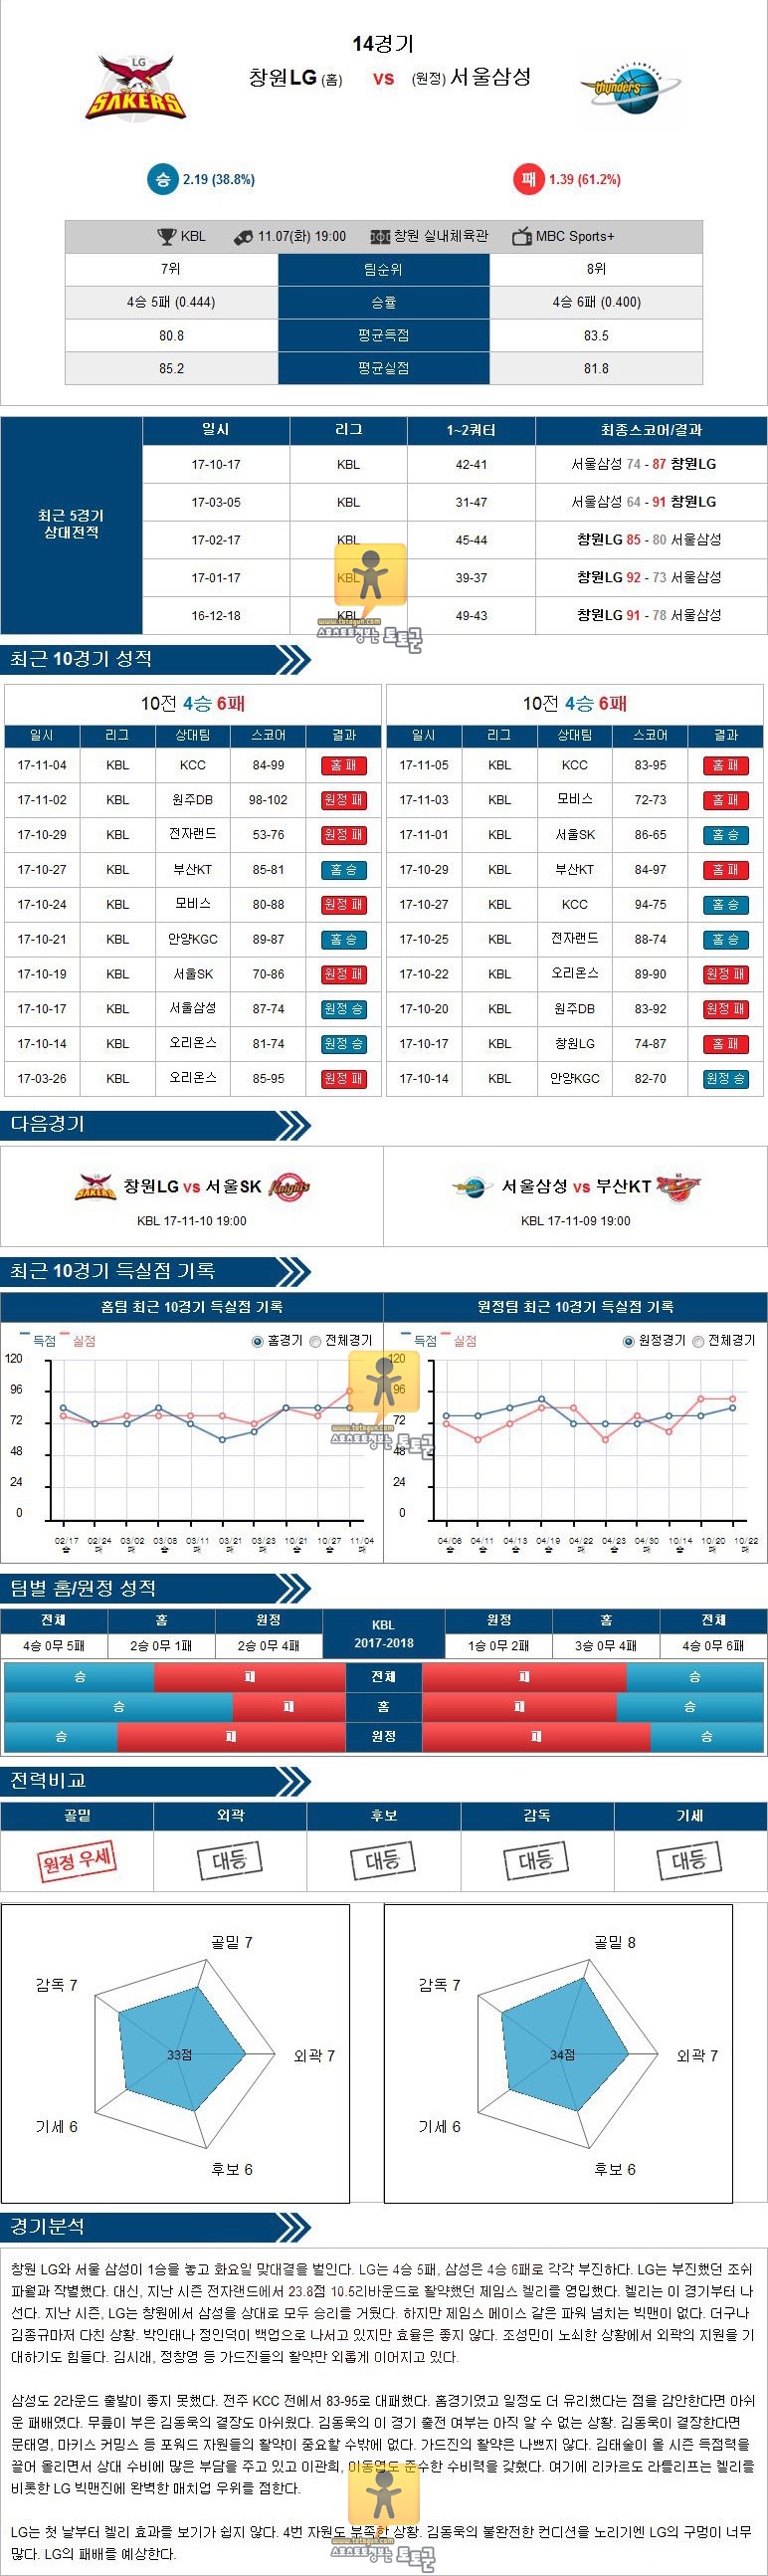 [KBL] 11월 7일 19:00 프로농구분석 창원LG VS 서울삼성